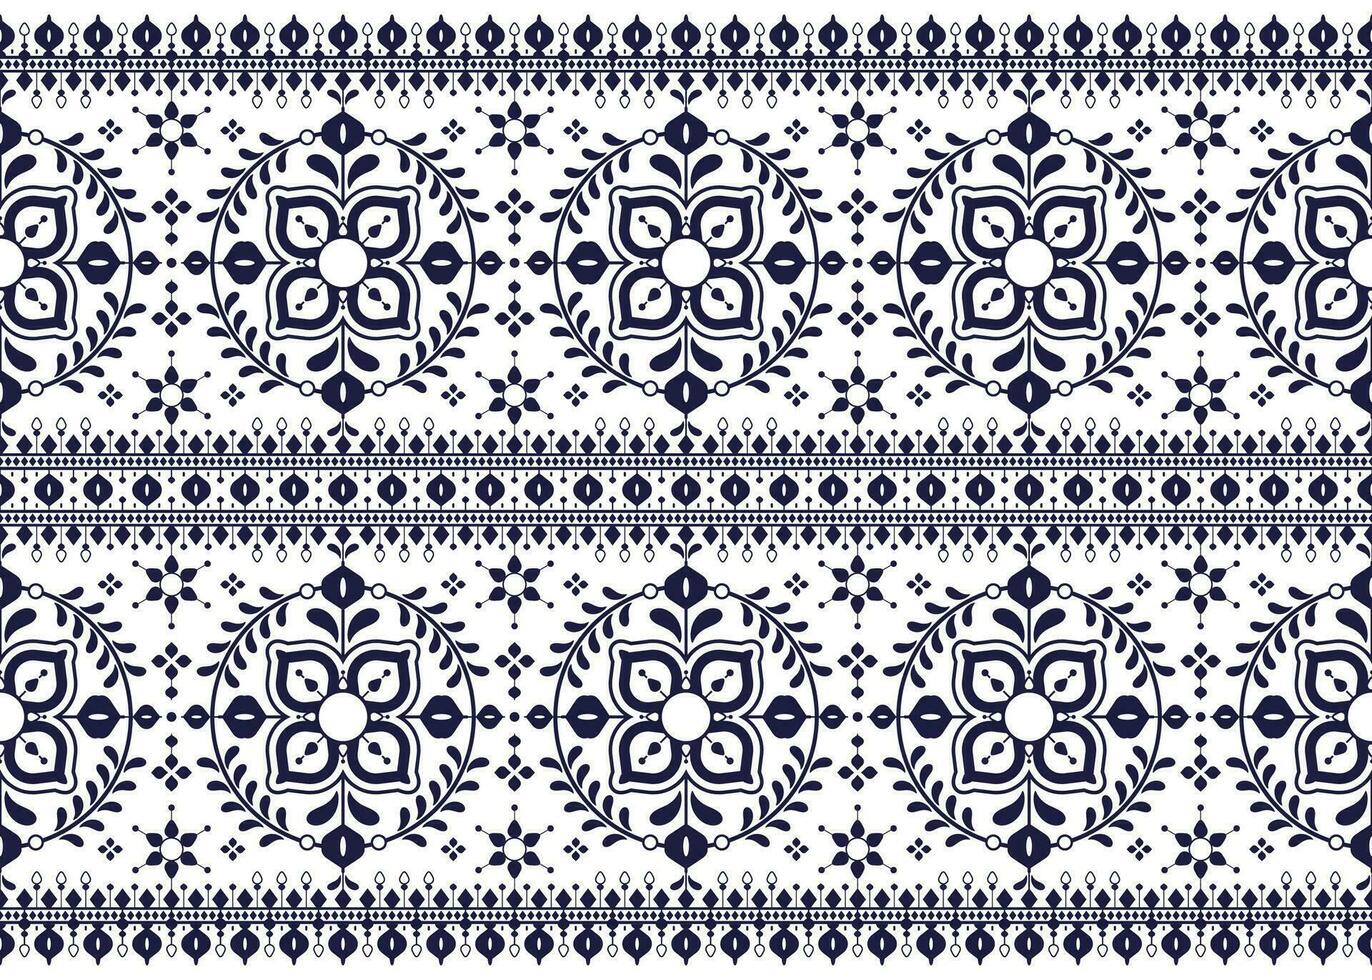 geométrico y flor étnico tela modelo en azul antecedentes para paño alfombra fondo de pantalla antecedentes envase etc. vector